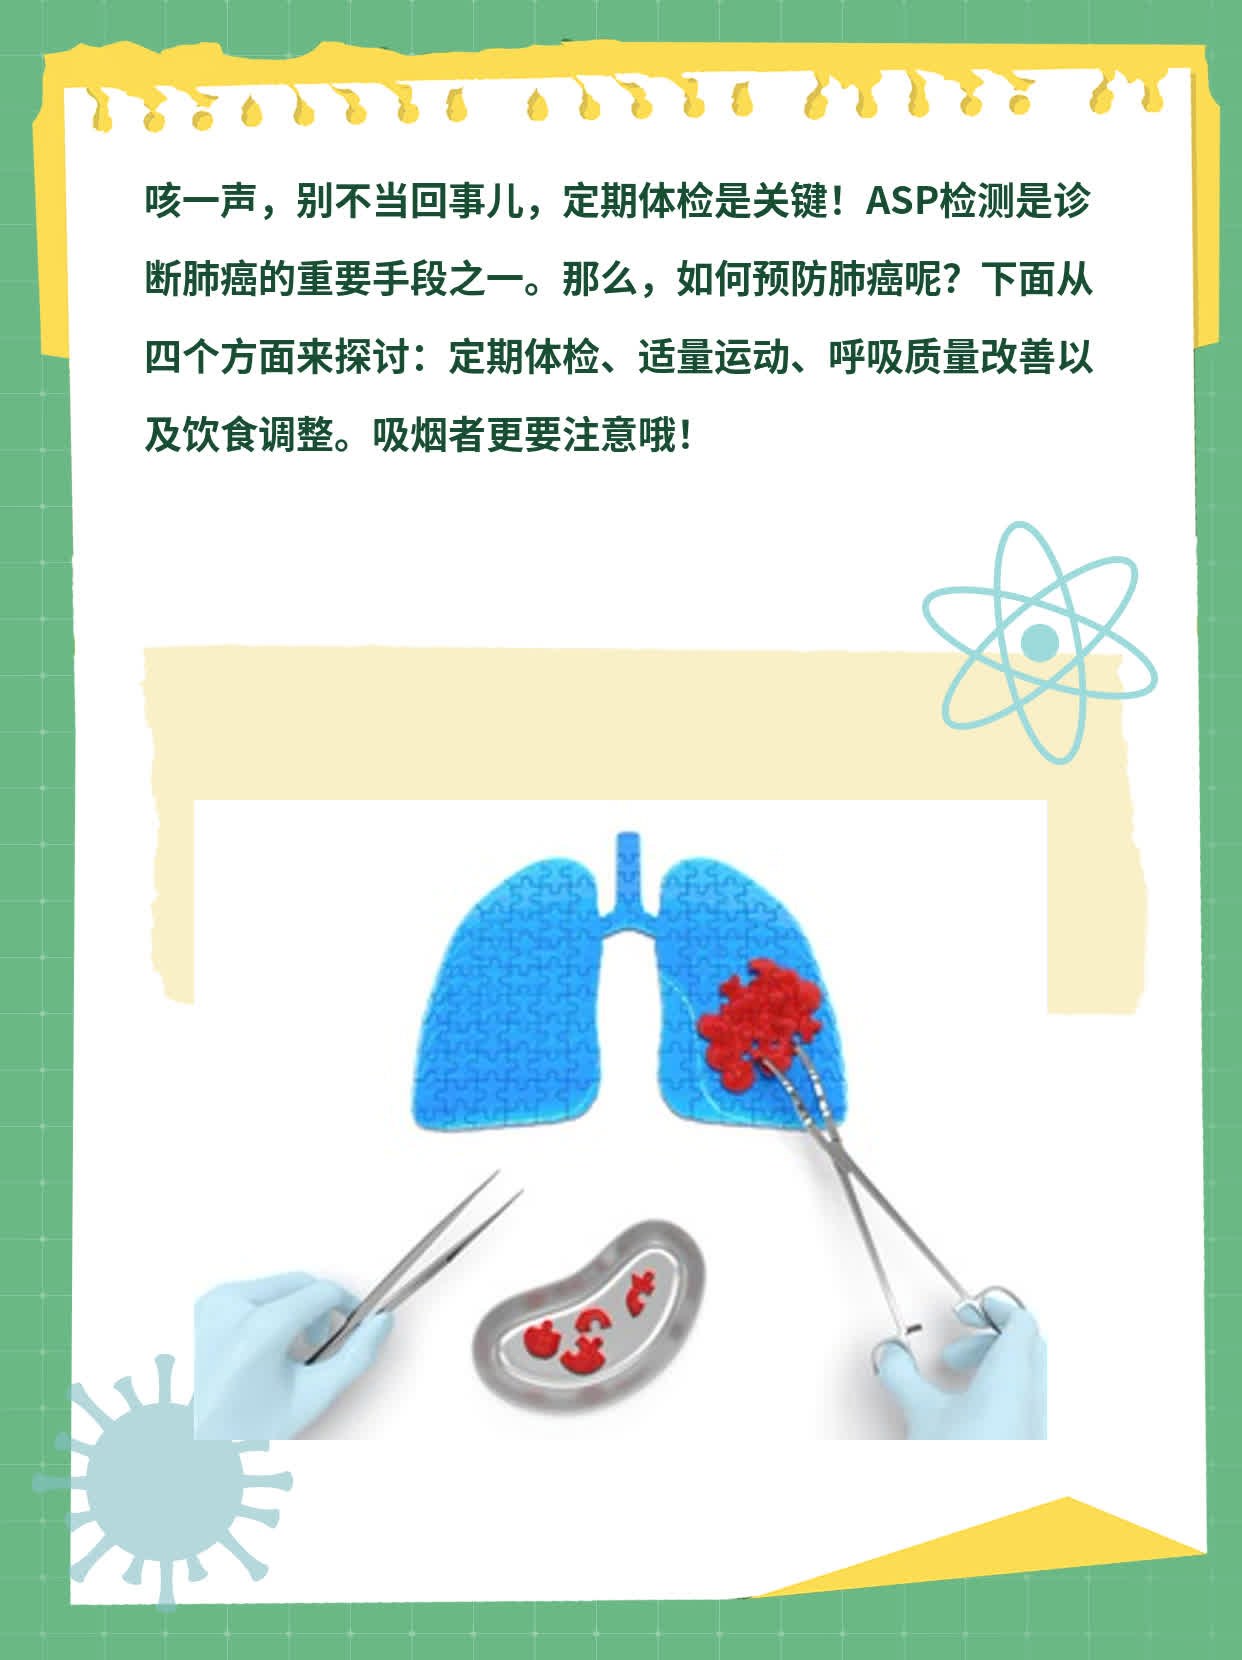 ASP检测：诊断肺癌的首选利器？